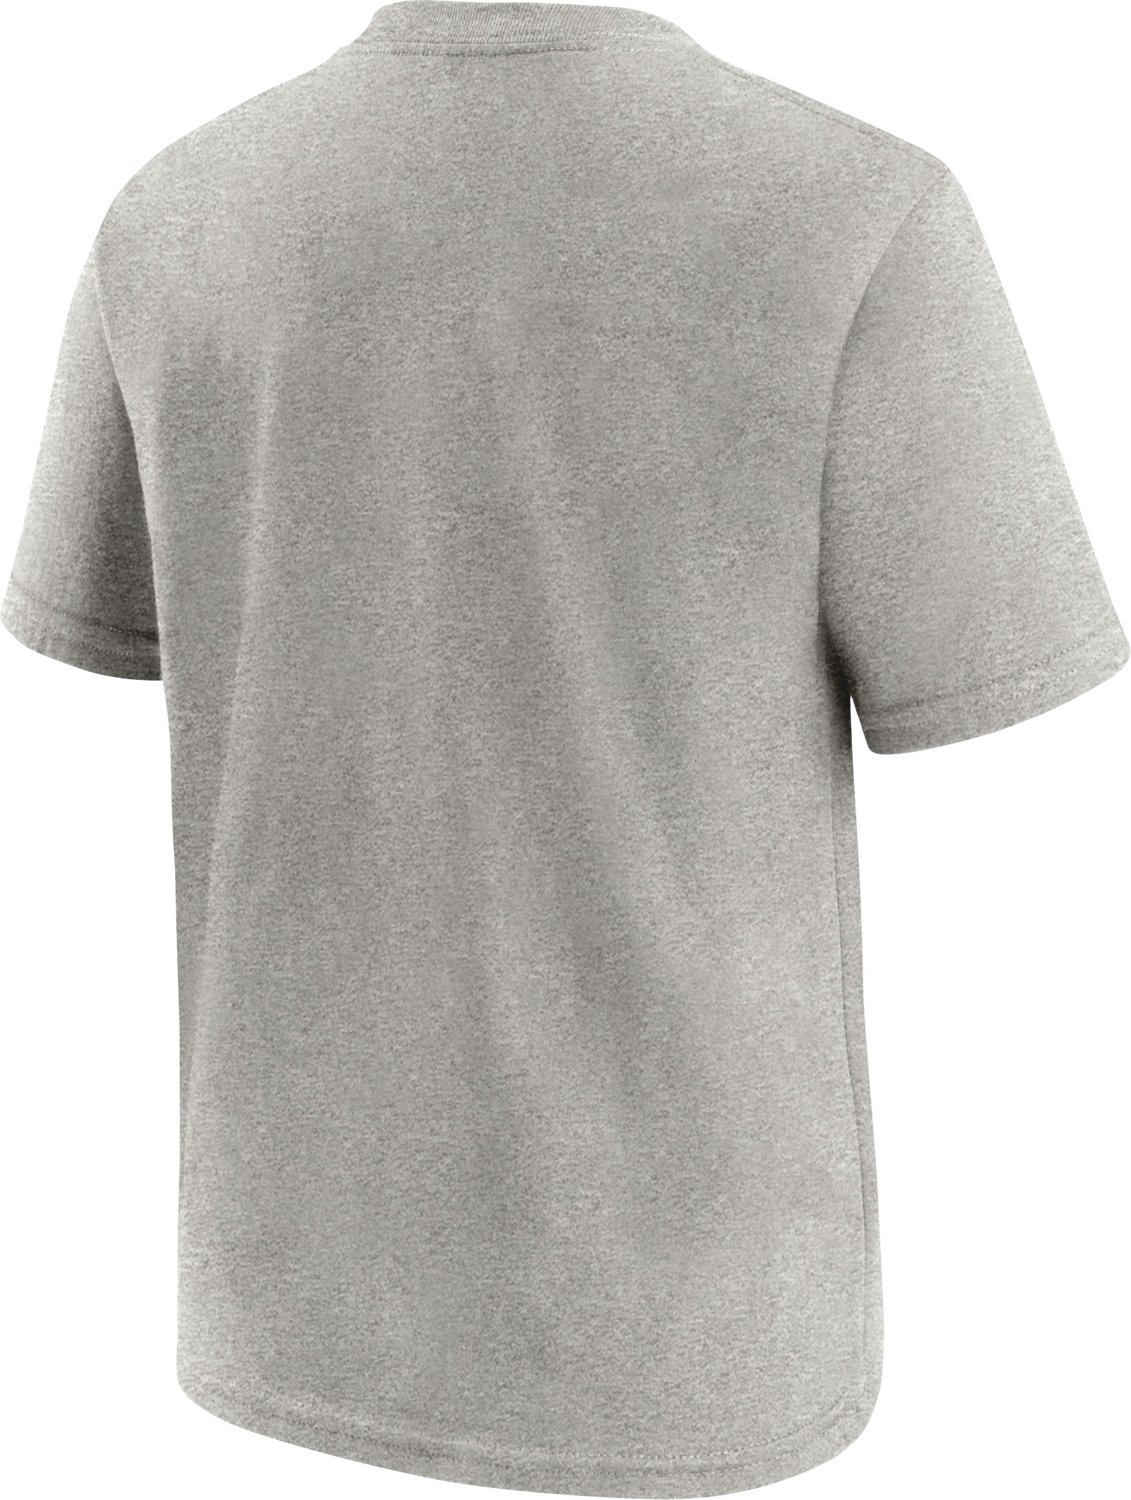 Nike Youth Atlanta Braves Team Engineered T-shirt